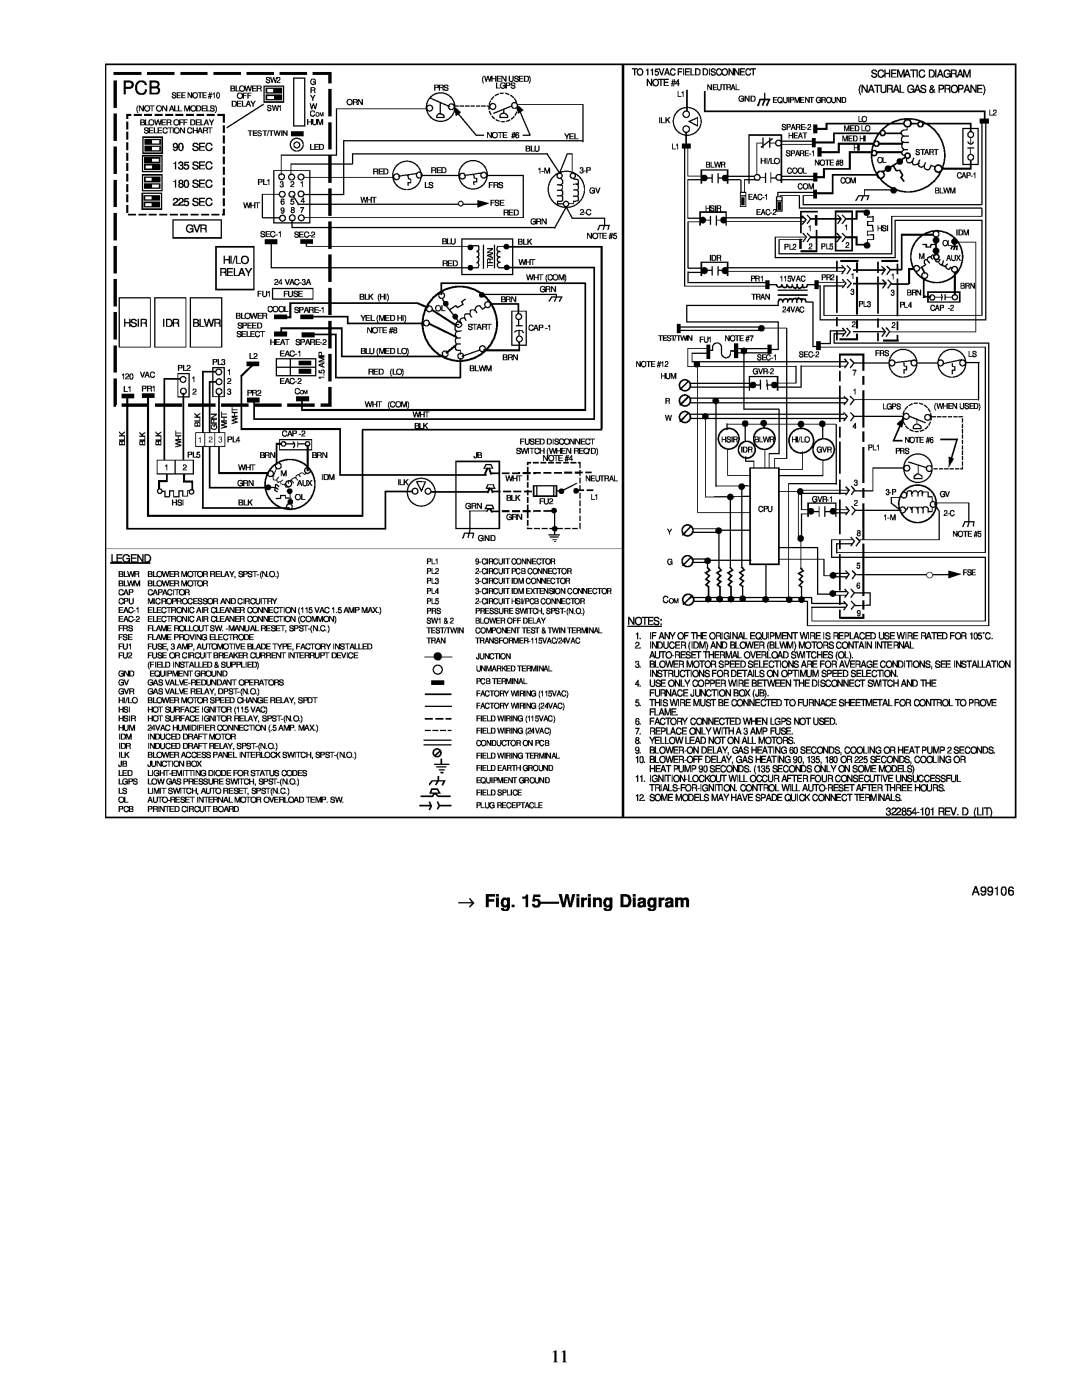 Carrier 58MXA instruction manual → ÐWiring Diagram, A99106 